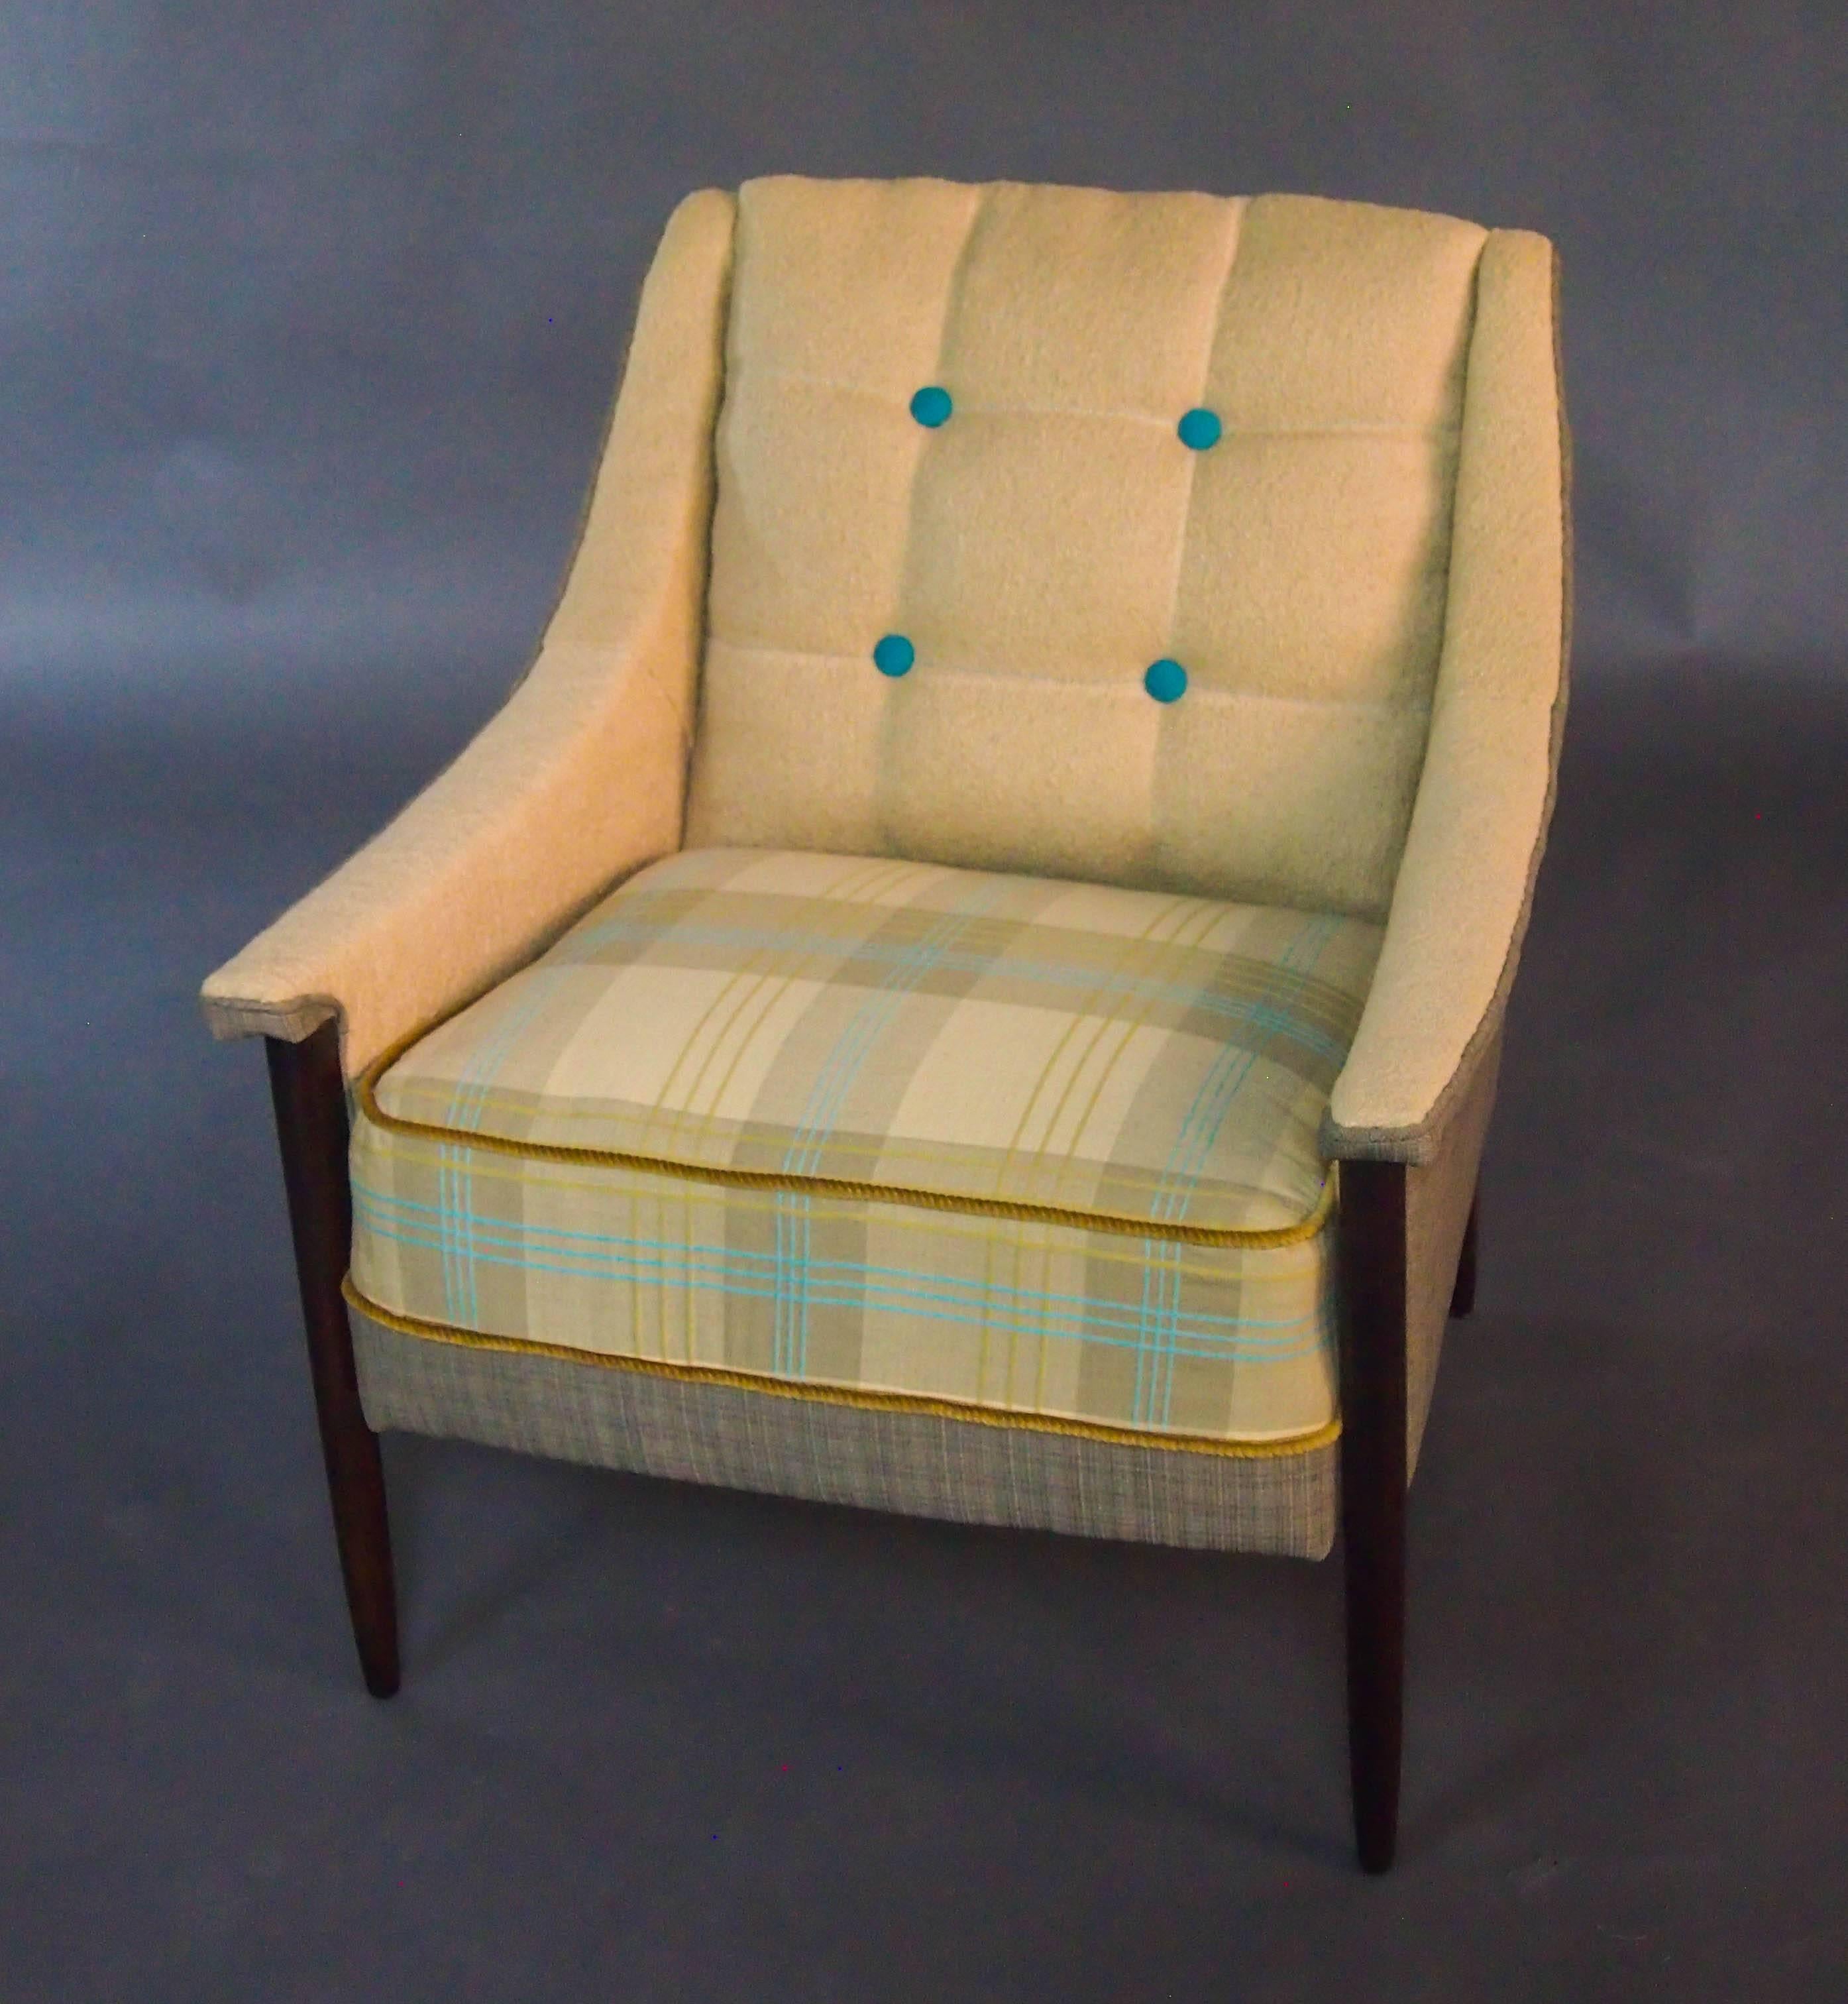 armchair in stock